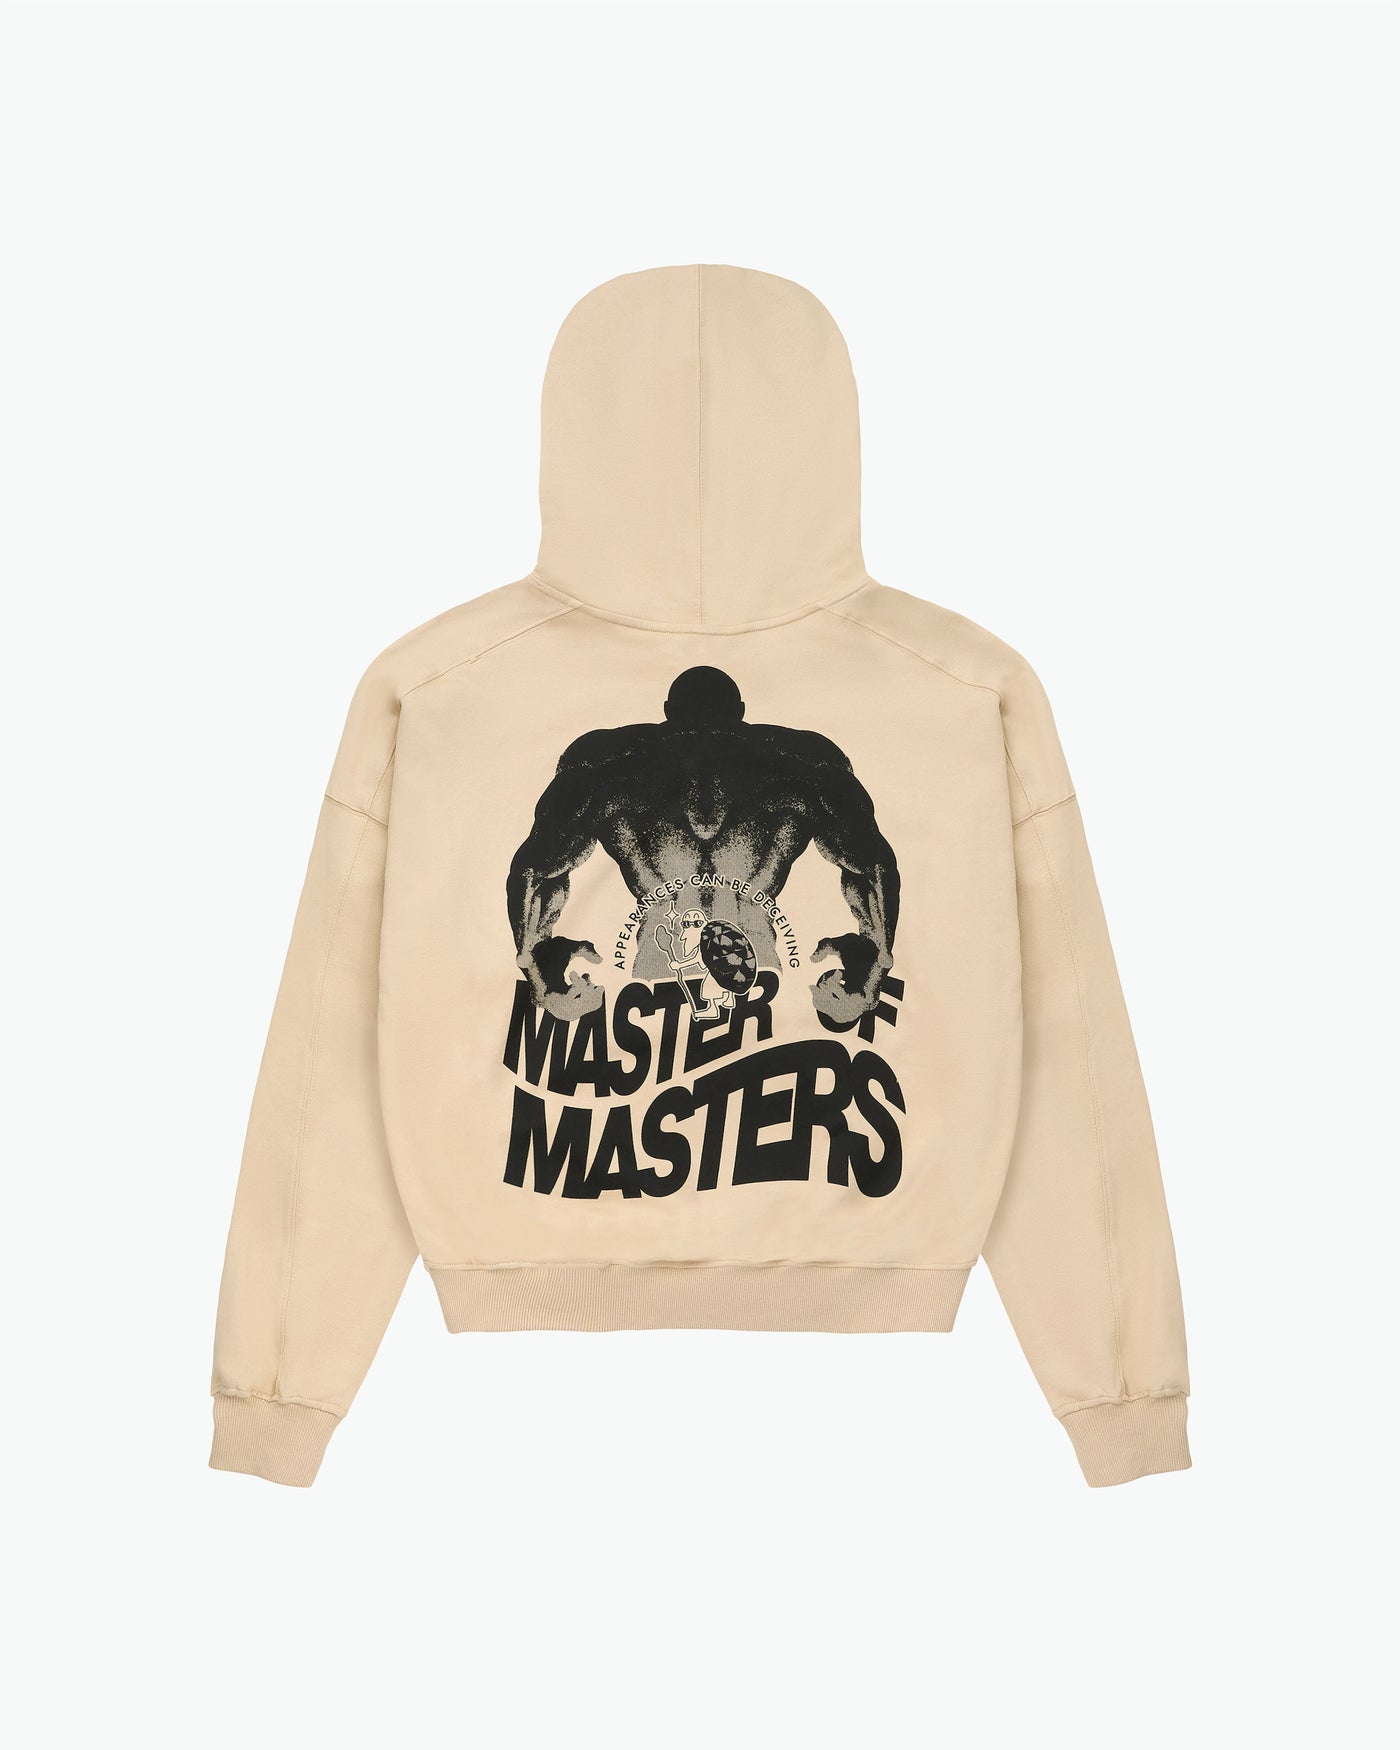 Masters Of Masters Heavyweight Hoodie / Sand / Black